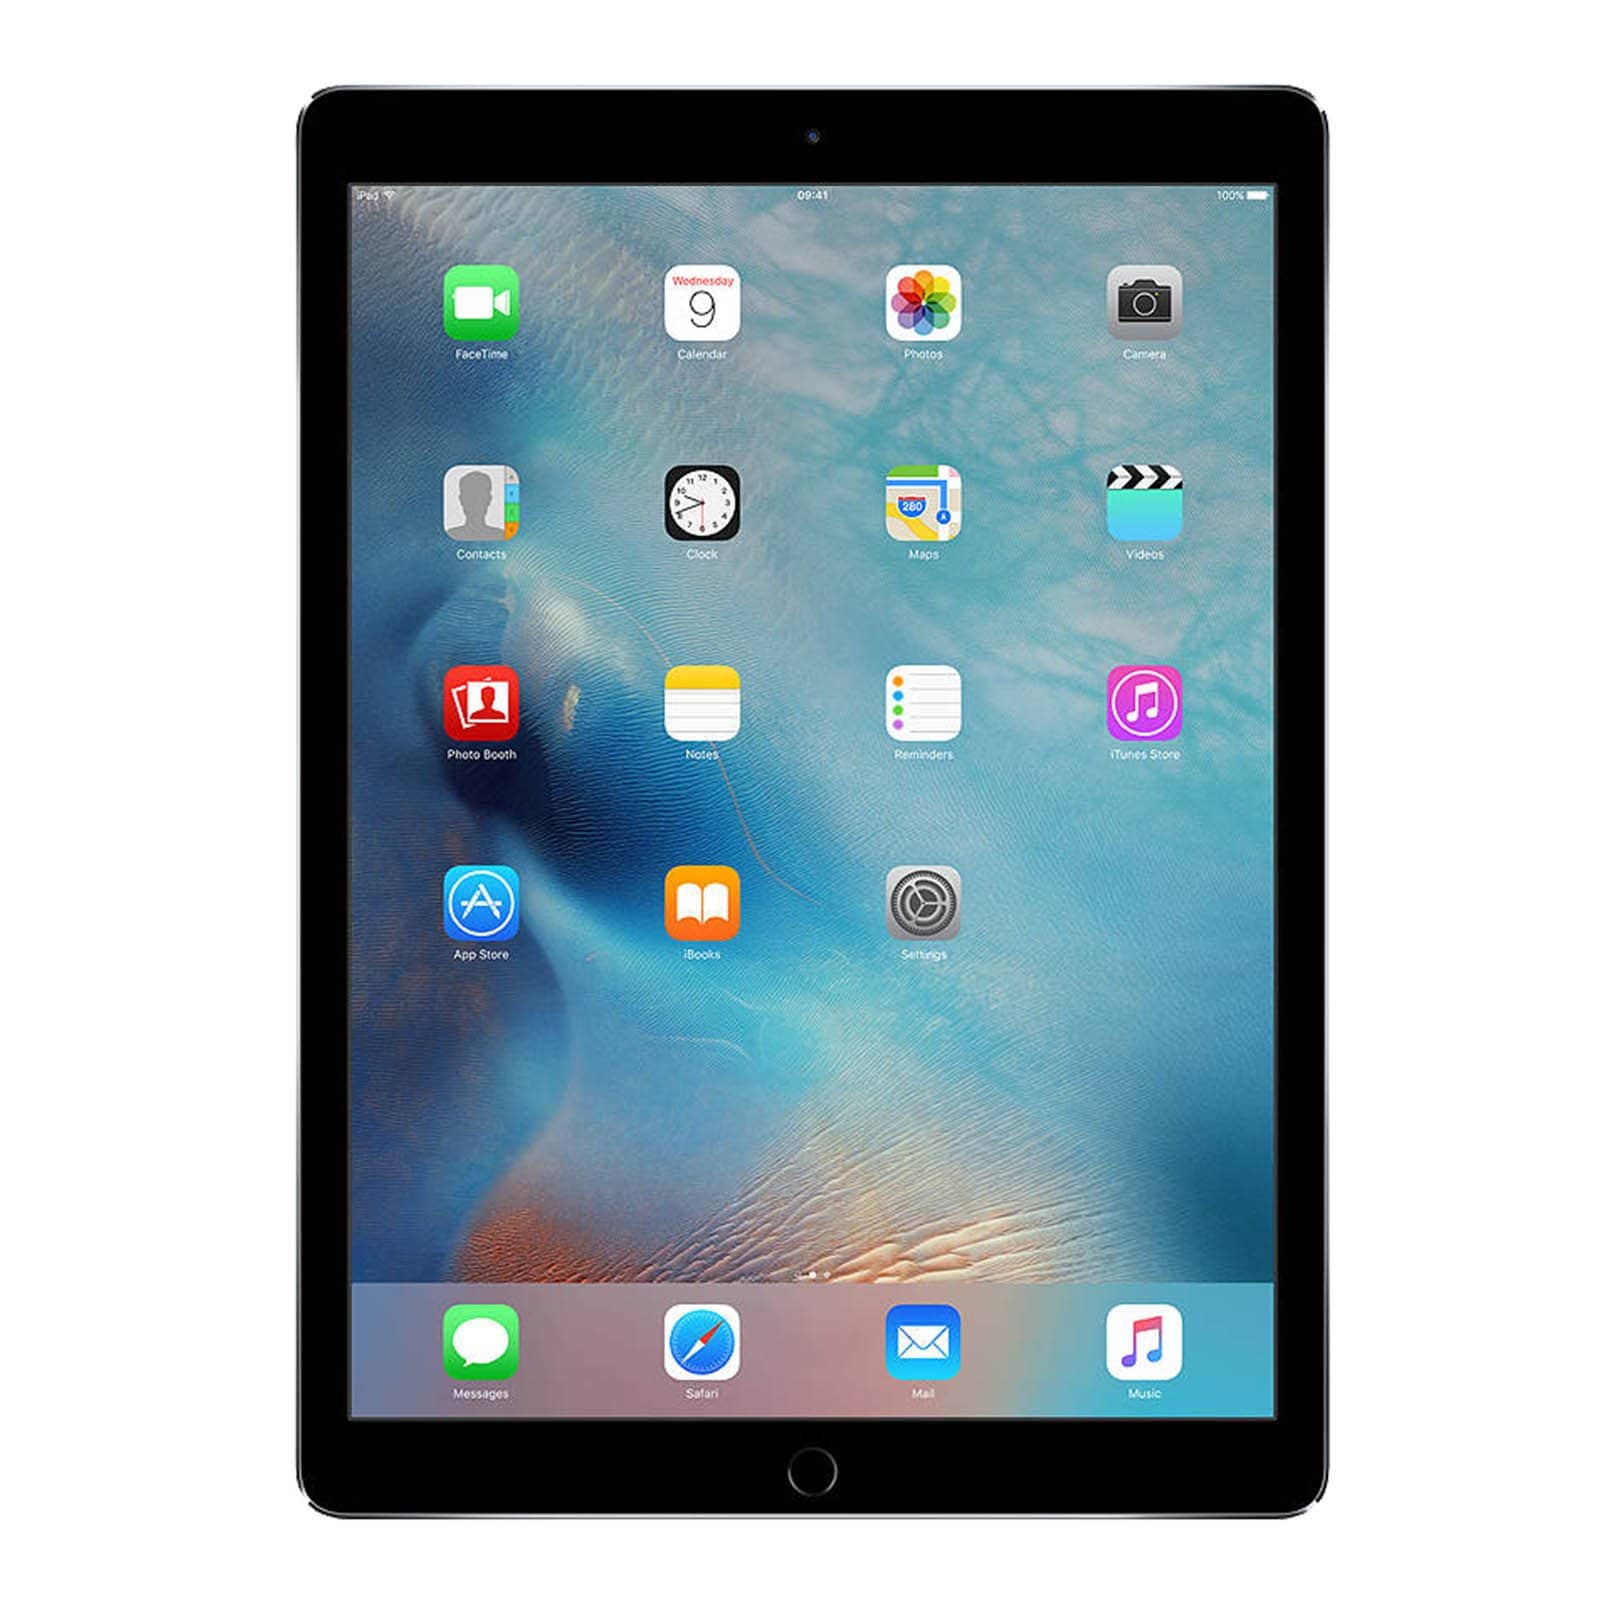 iPad Pro 12.9 Inch 2nd Gen 256GB Space Grey Good - WiFi